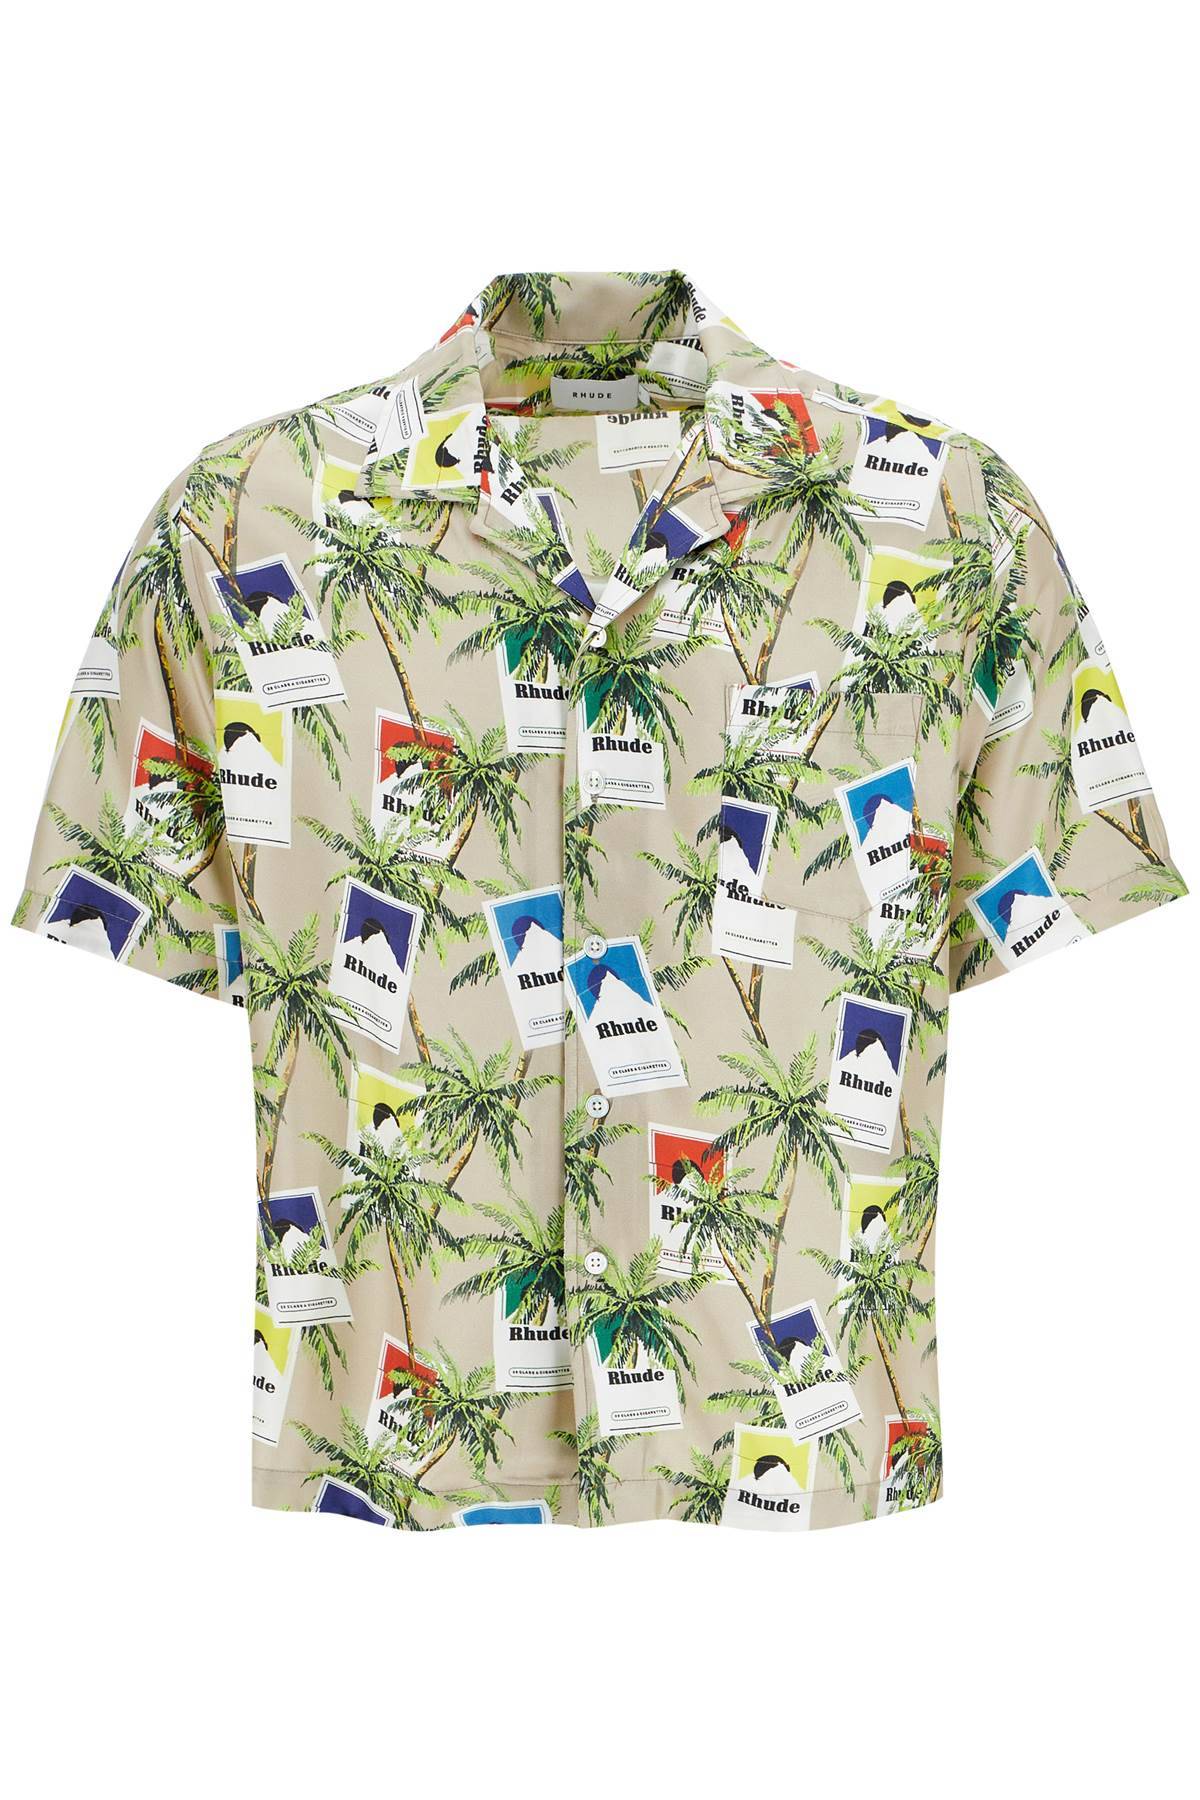 Rhude RHUDE 'cigarette' bowling shirt in silk